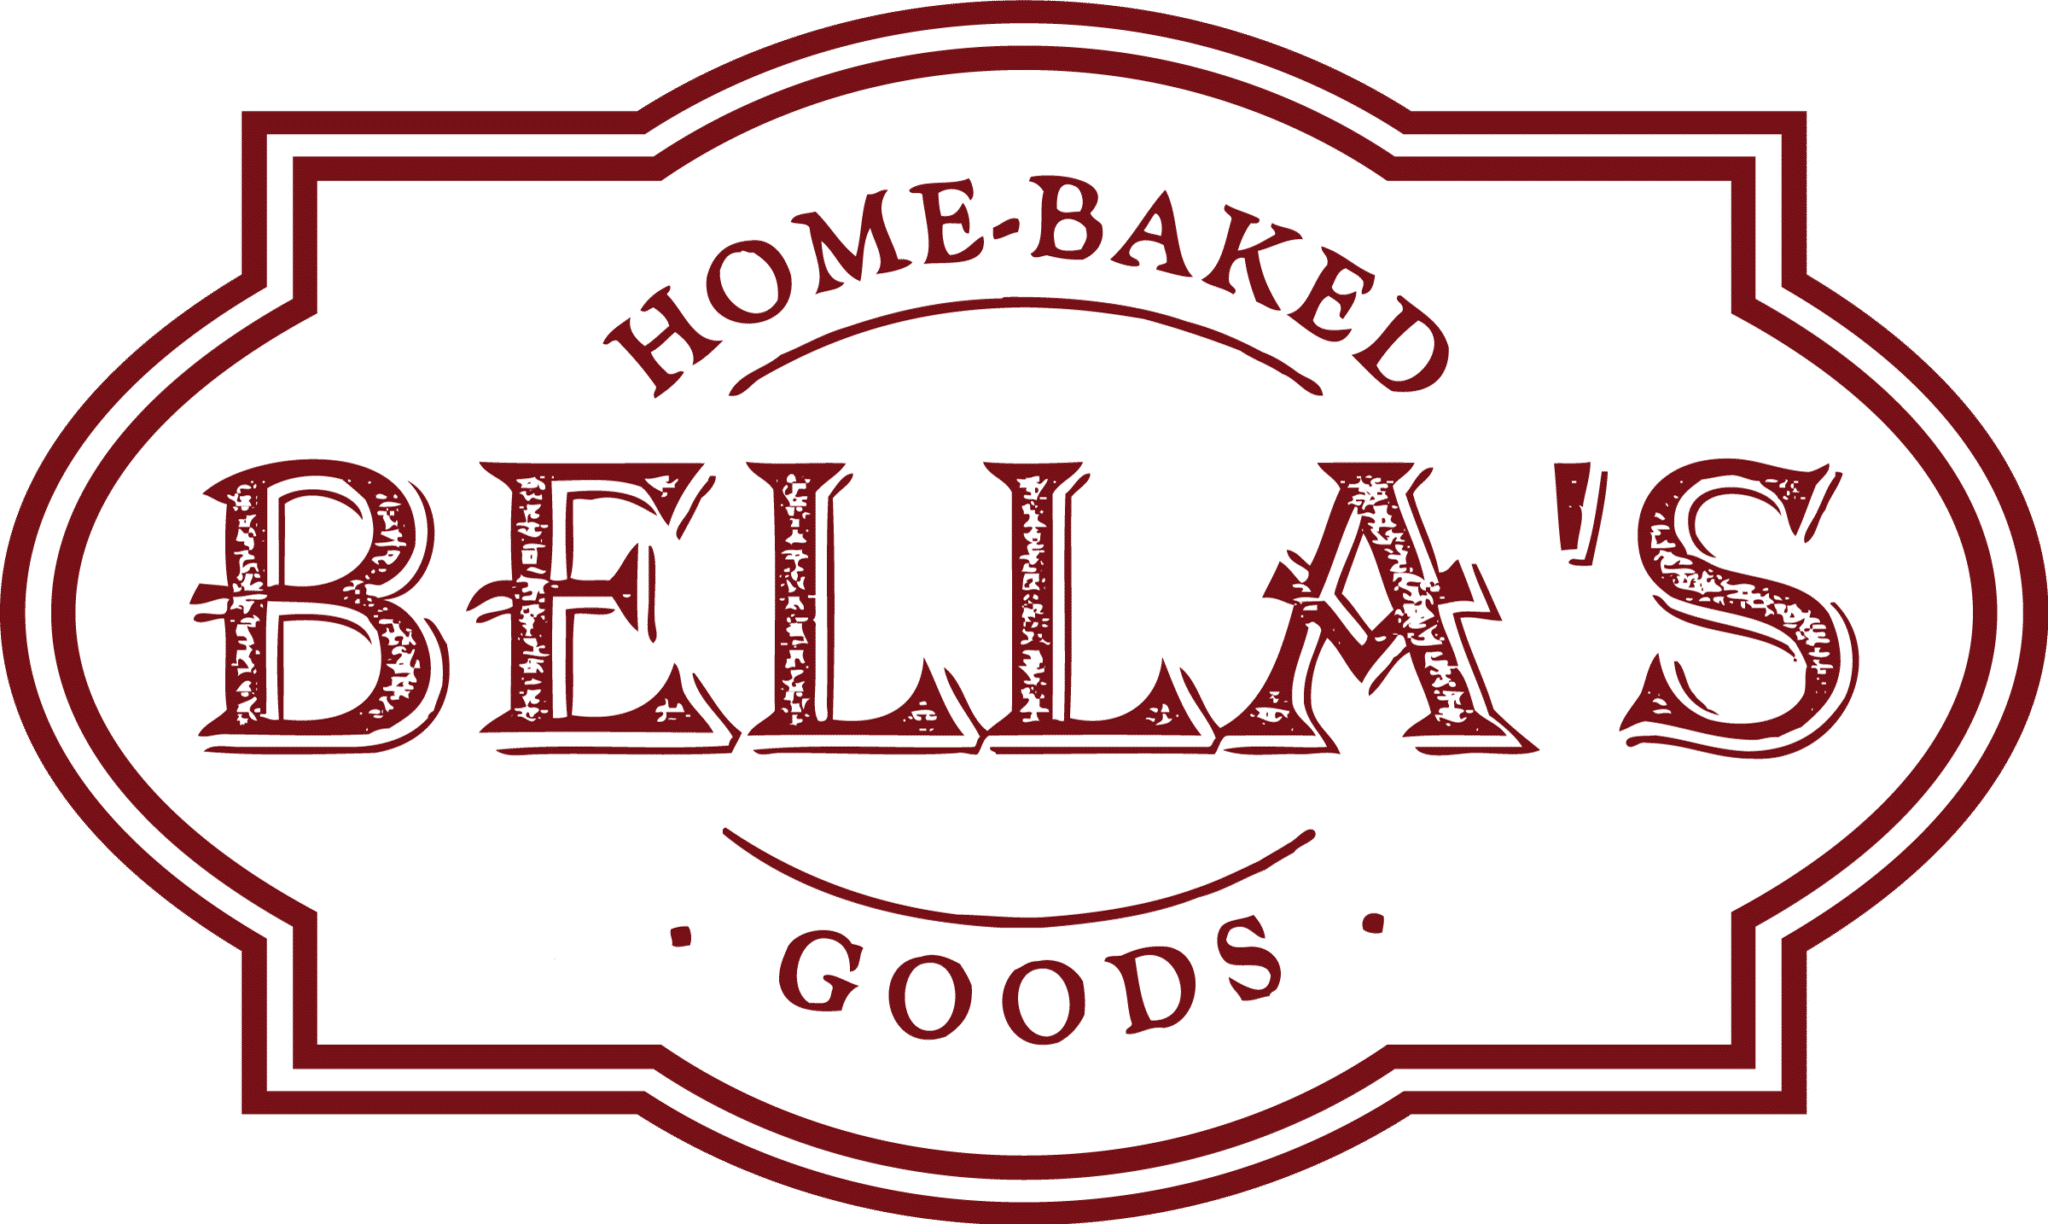 Bella's Home Baked Goods